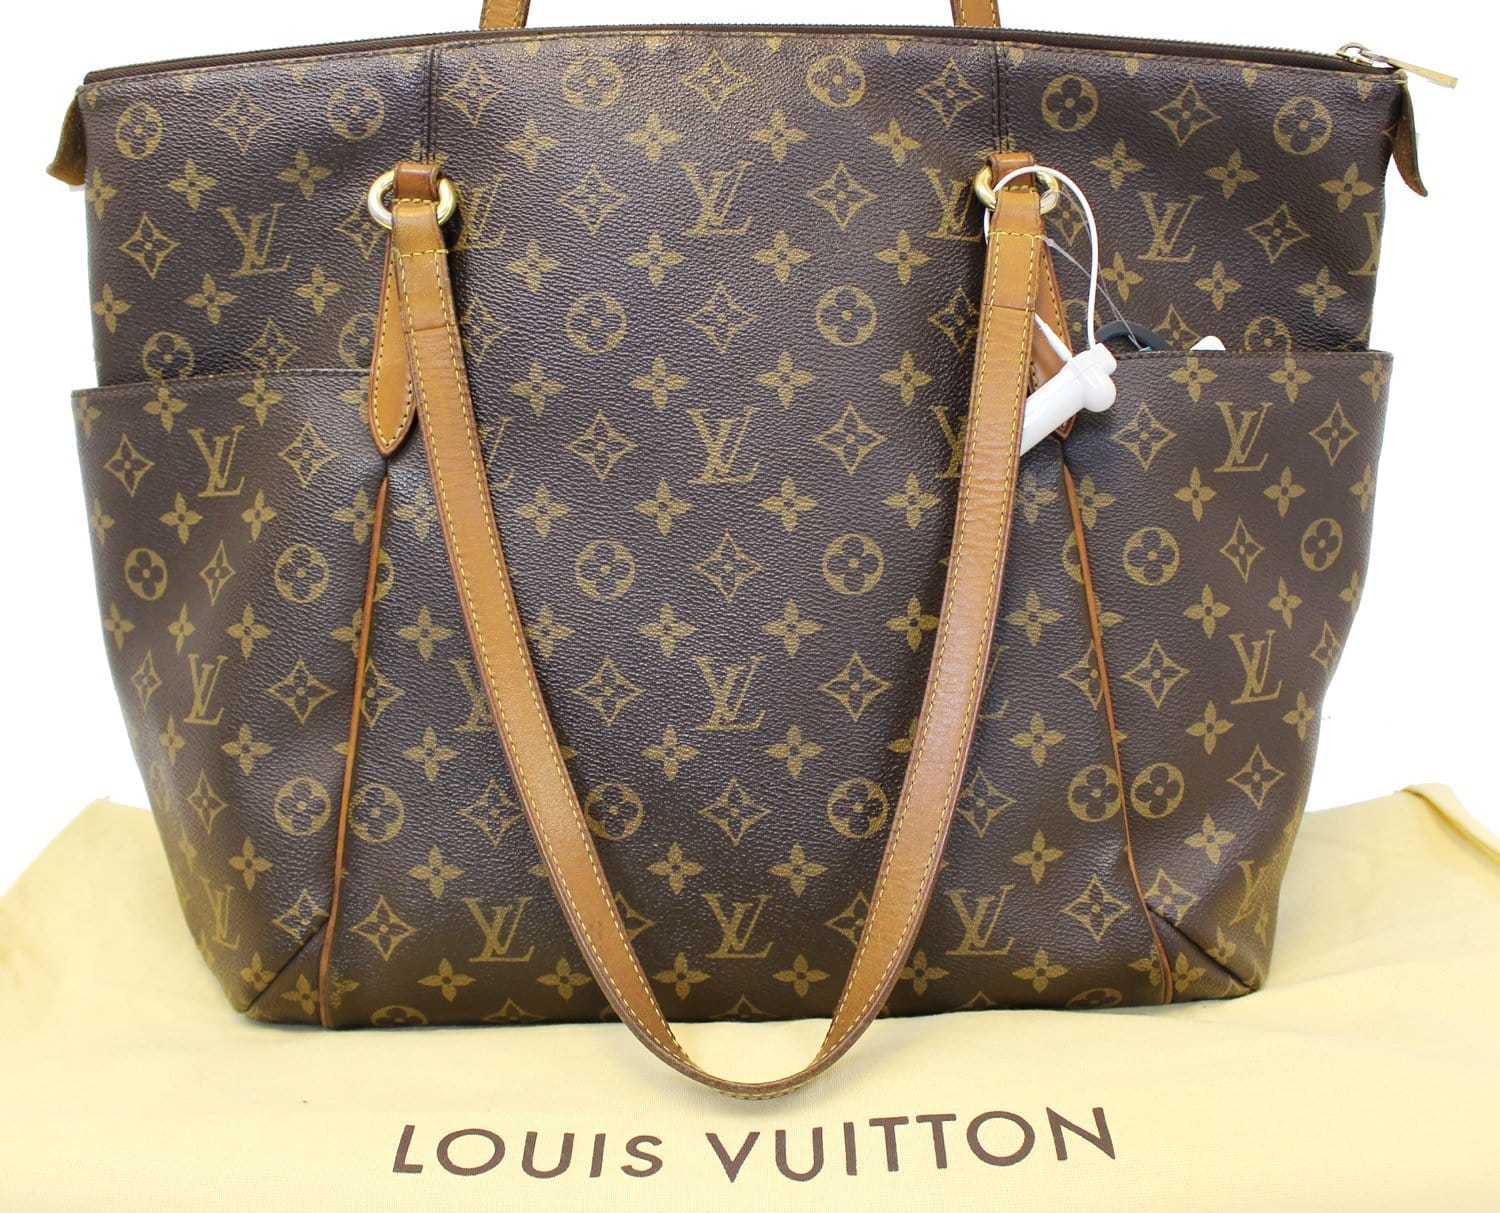 Louis Vuitton Monogram Bag with Side Pocket